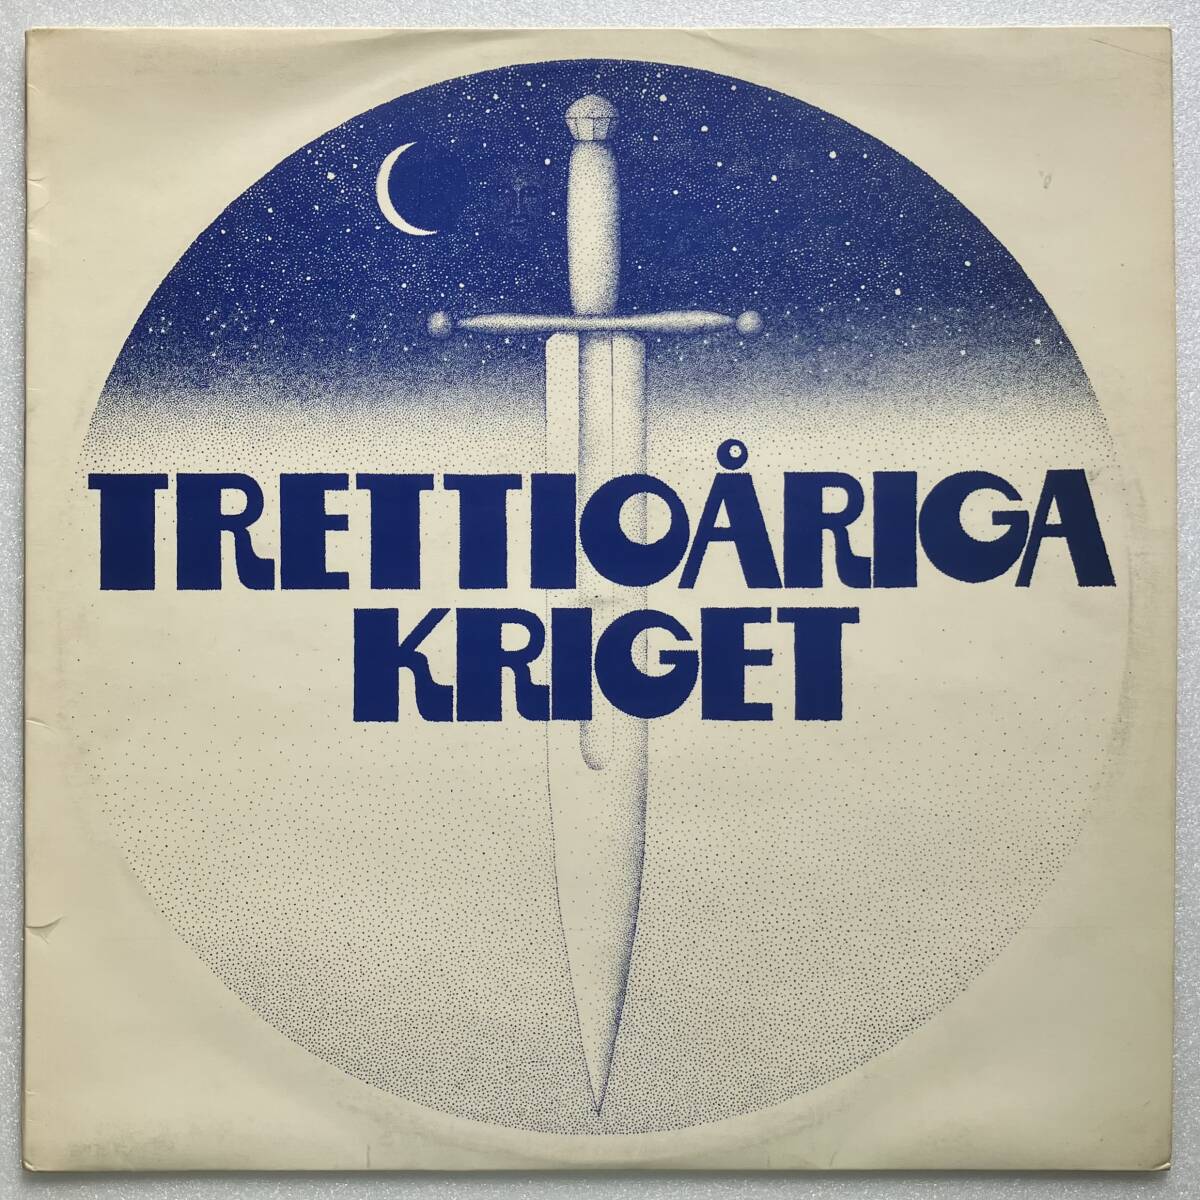 TRETTIOARIGA KRIGET「TRETTIOARIGA KRIGET」SWEDEN ORIGINAL EPIC EPC 80220 '74 LAMINATED SLEEVE with ORIGINAL INNER SLEEVE_画像1